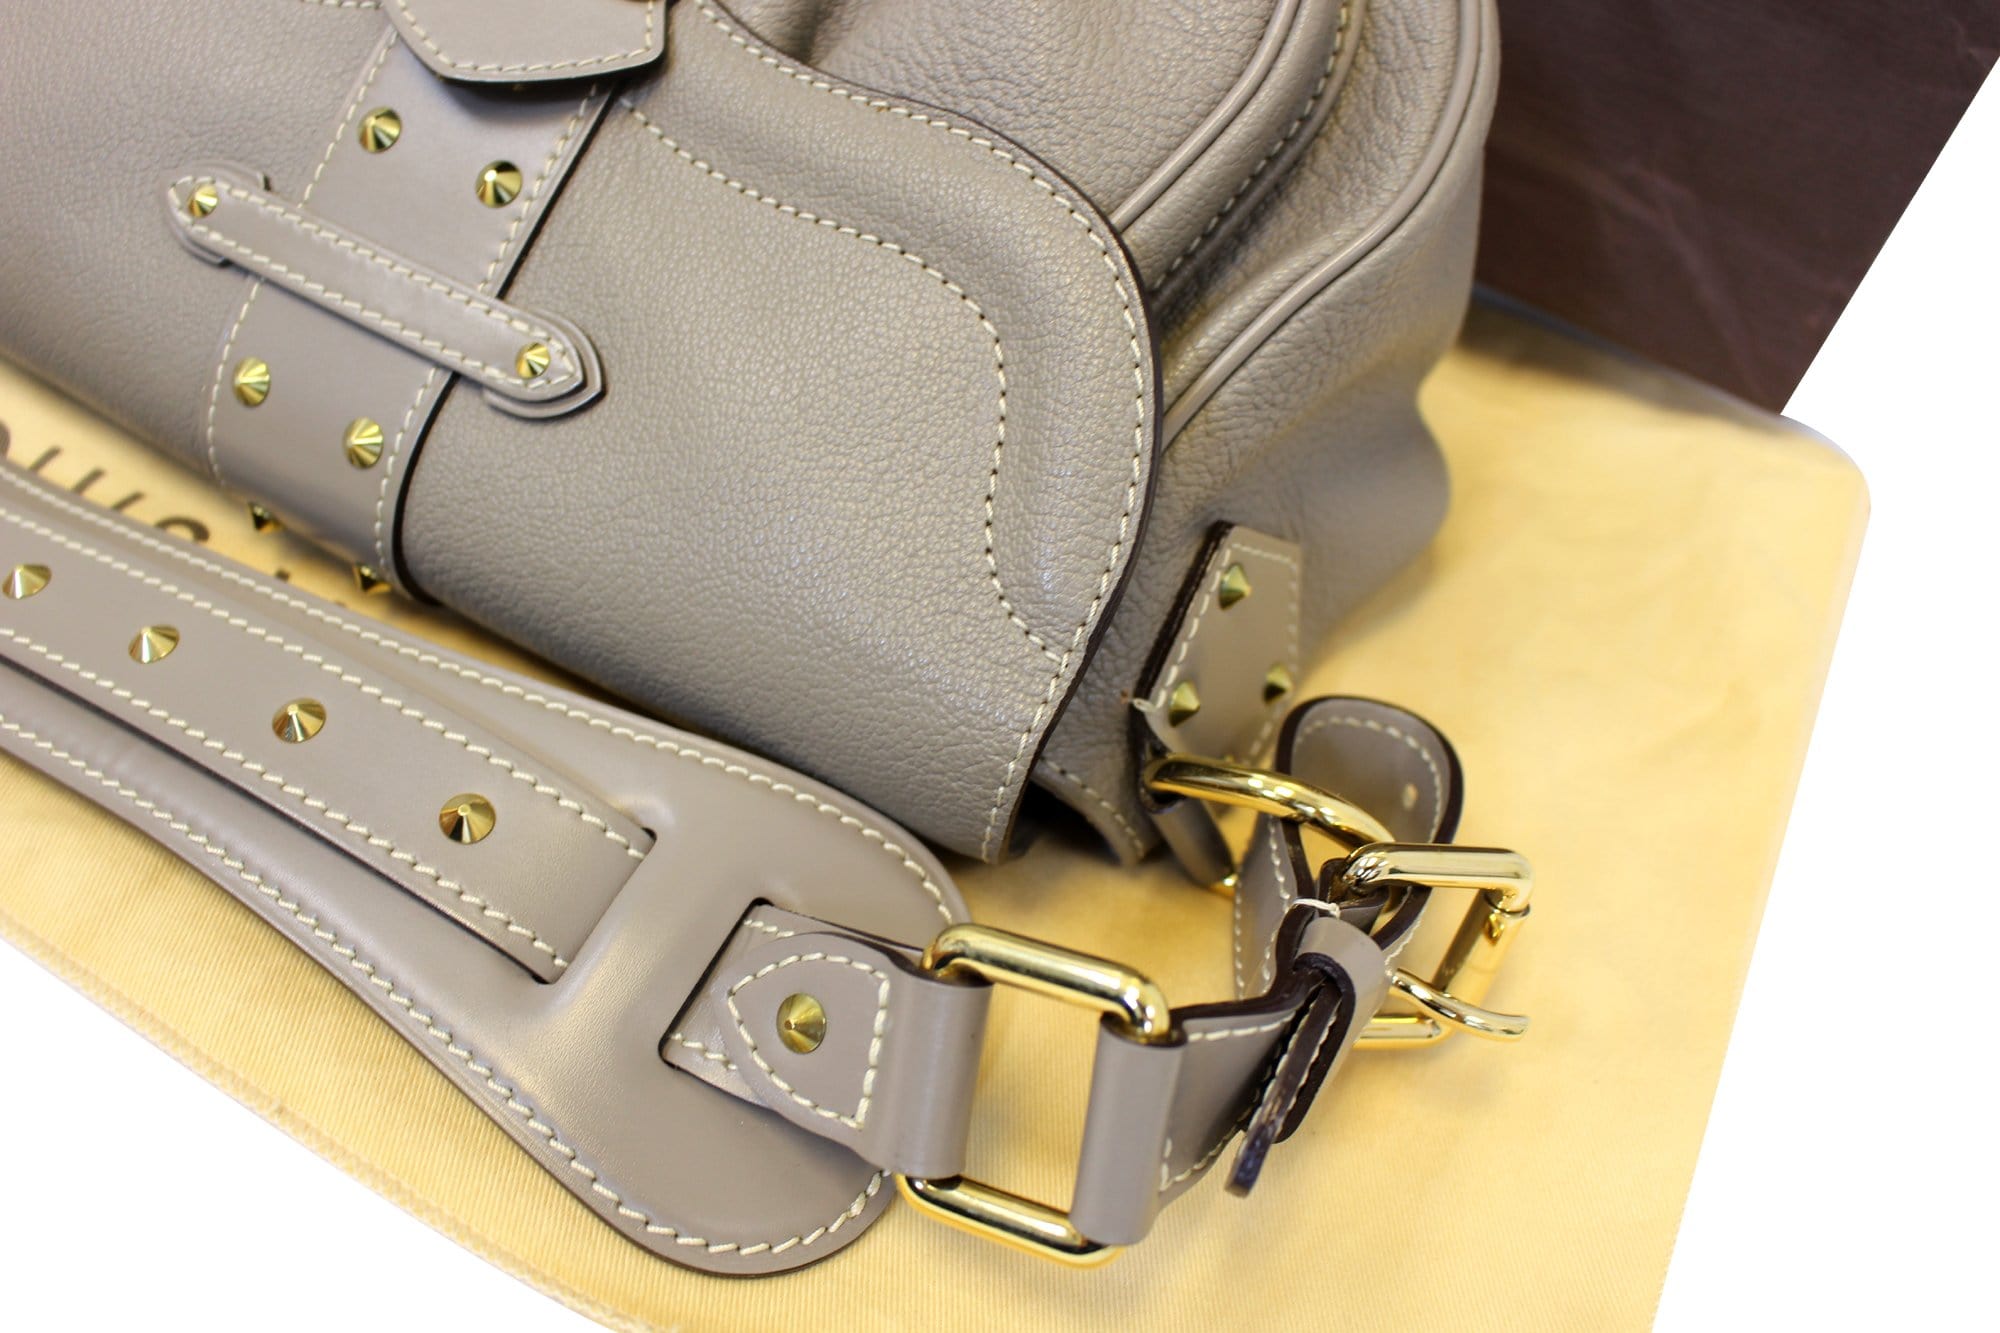 Pre-owned Louis Vuitton Verone Suhali Leather Le Confident Bag